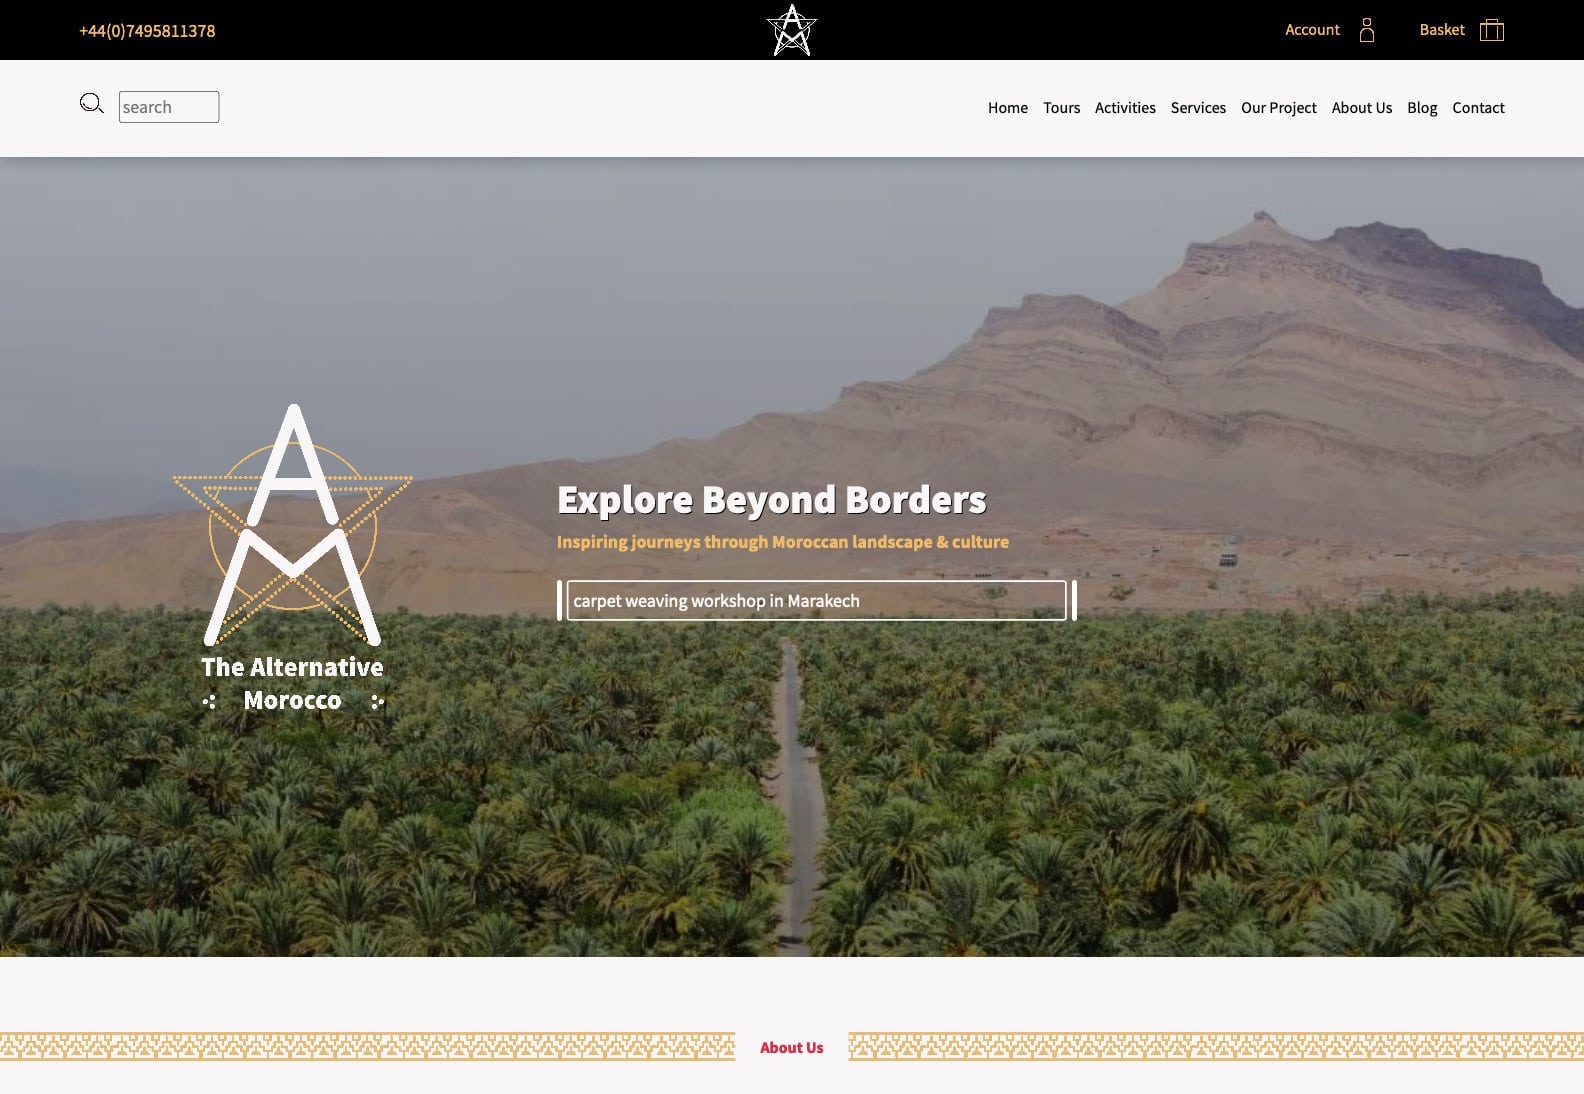 The alterantive morocco website screenshot